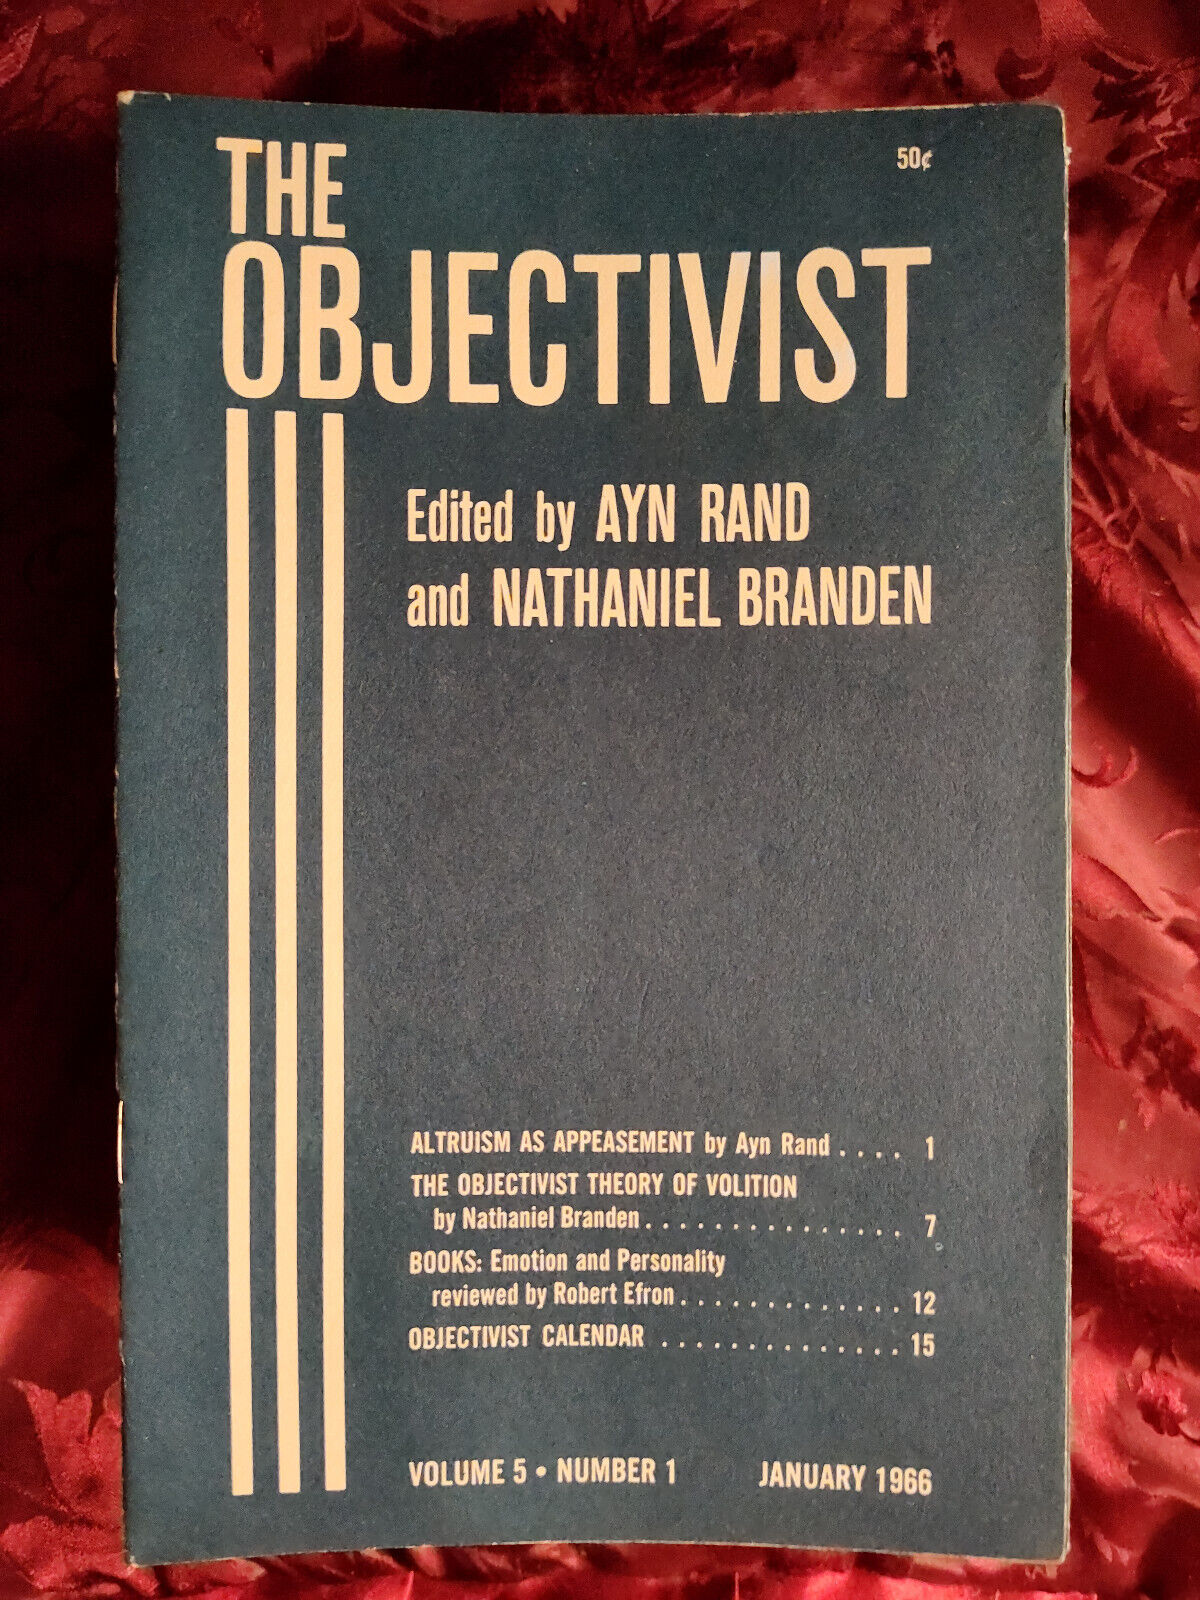 RARE Ayn Rand The Objectivist magazine FULL RUN individual Issues